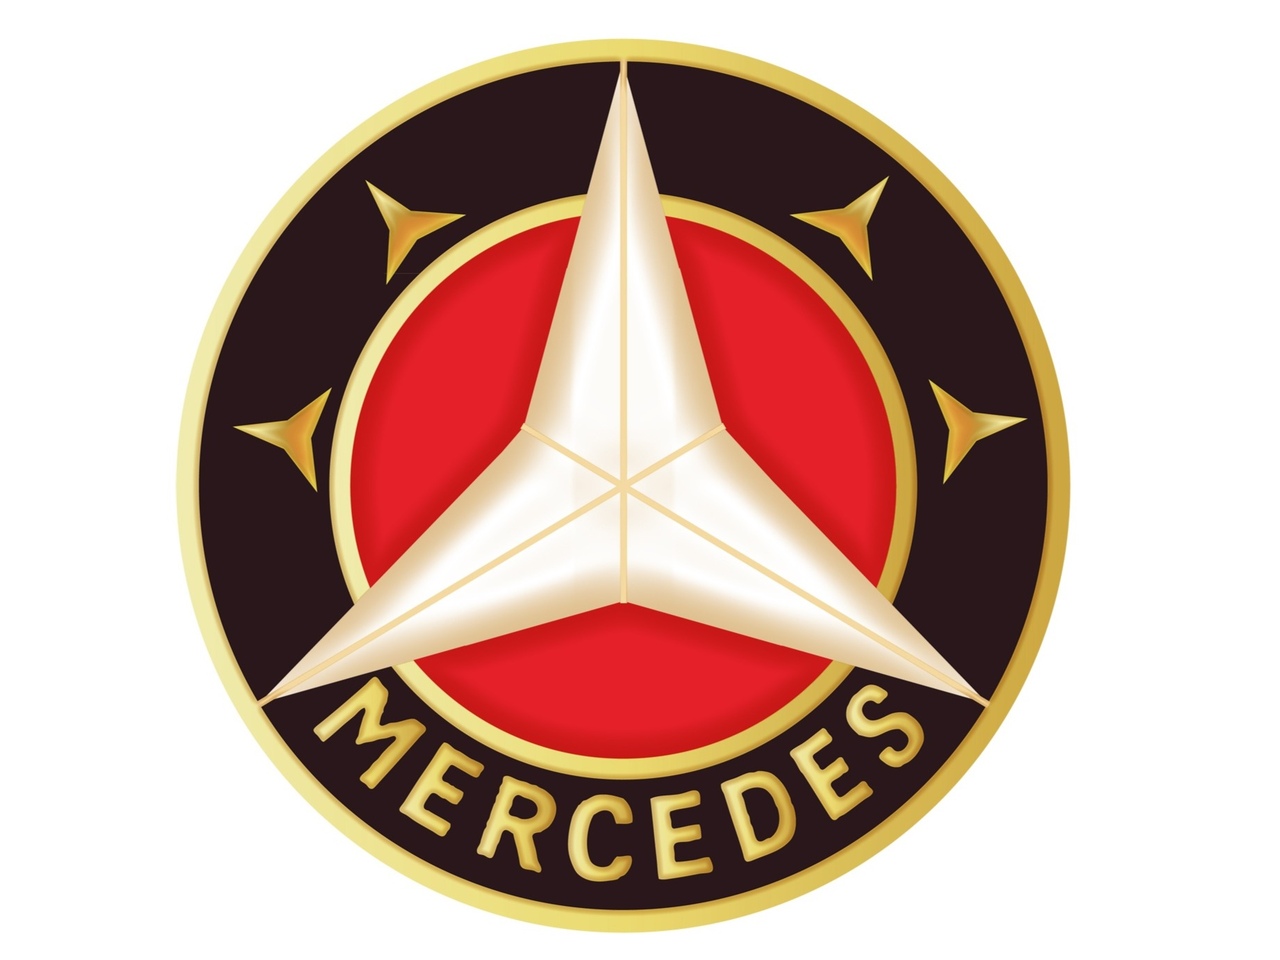 Эволюция логотипа Mercedes